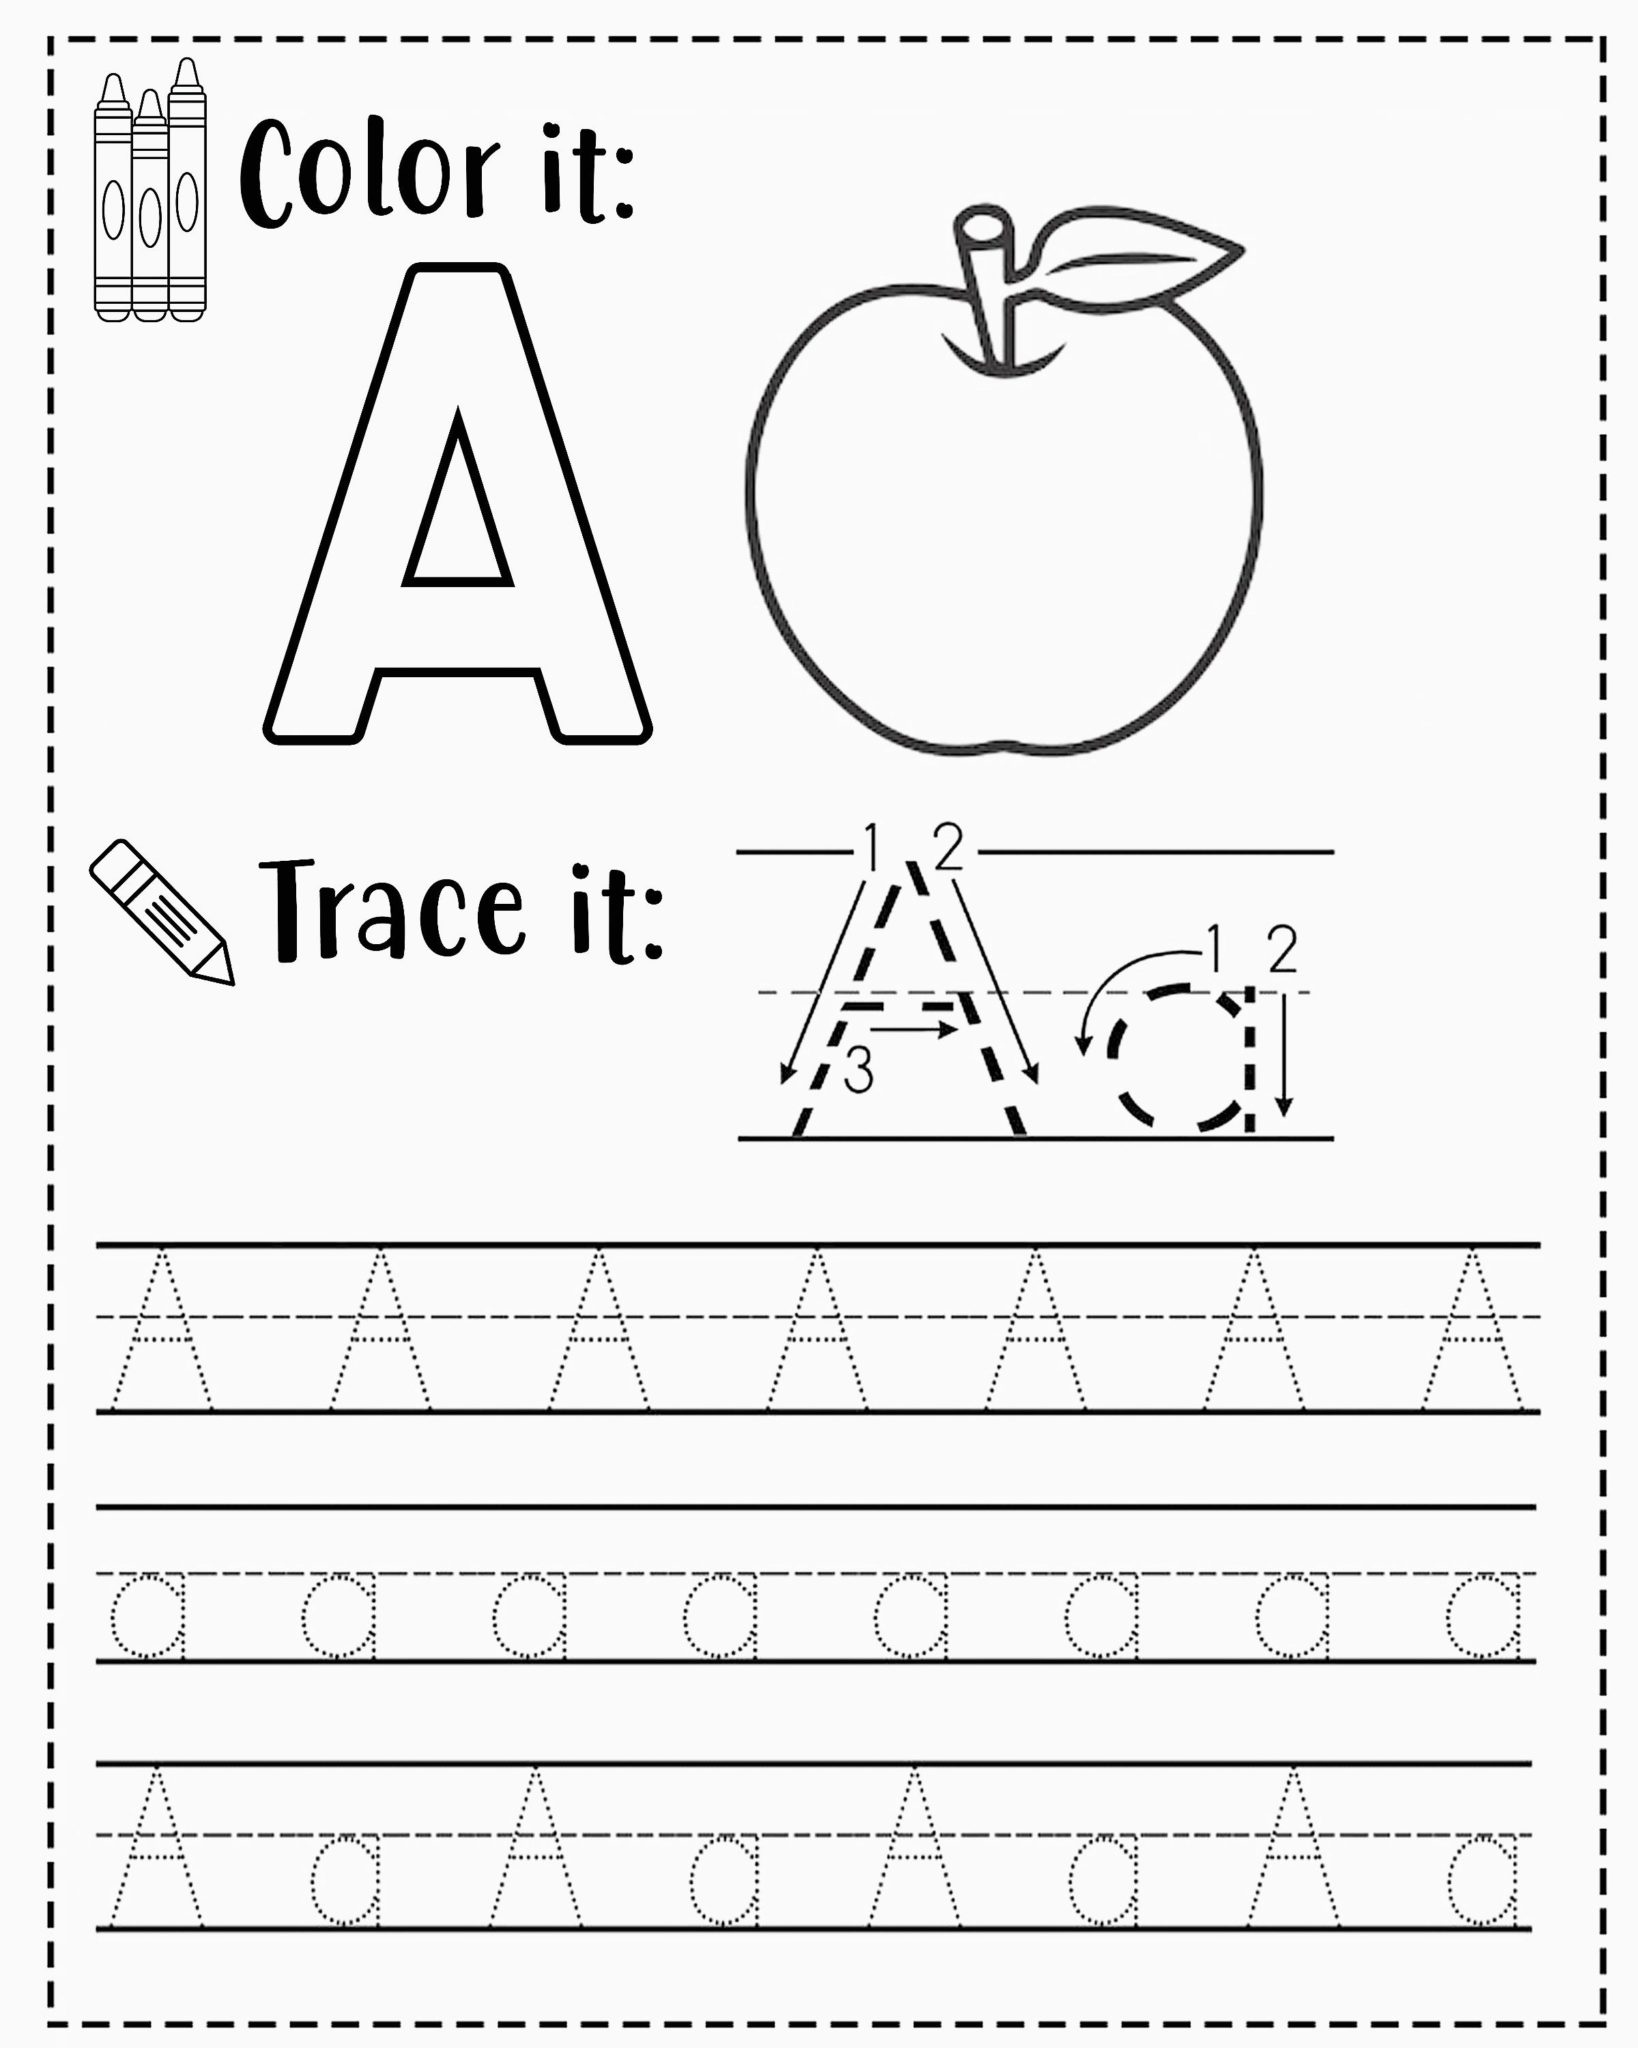 FREE Alphabet Tracing Worksheets For Preschoolers